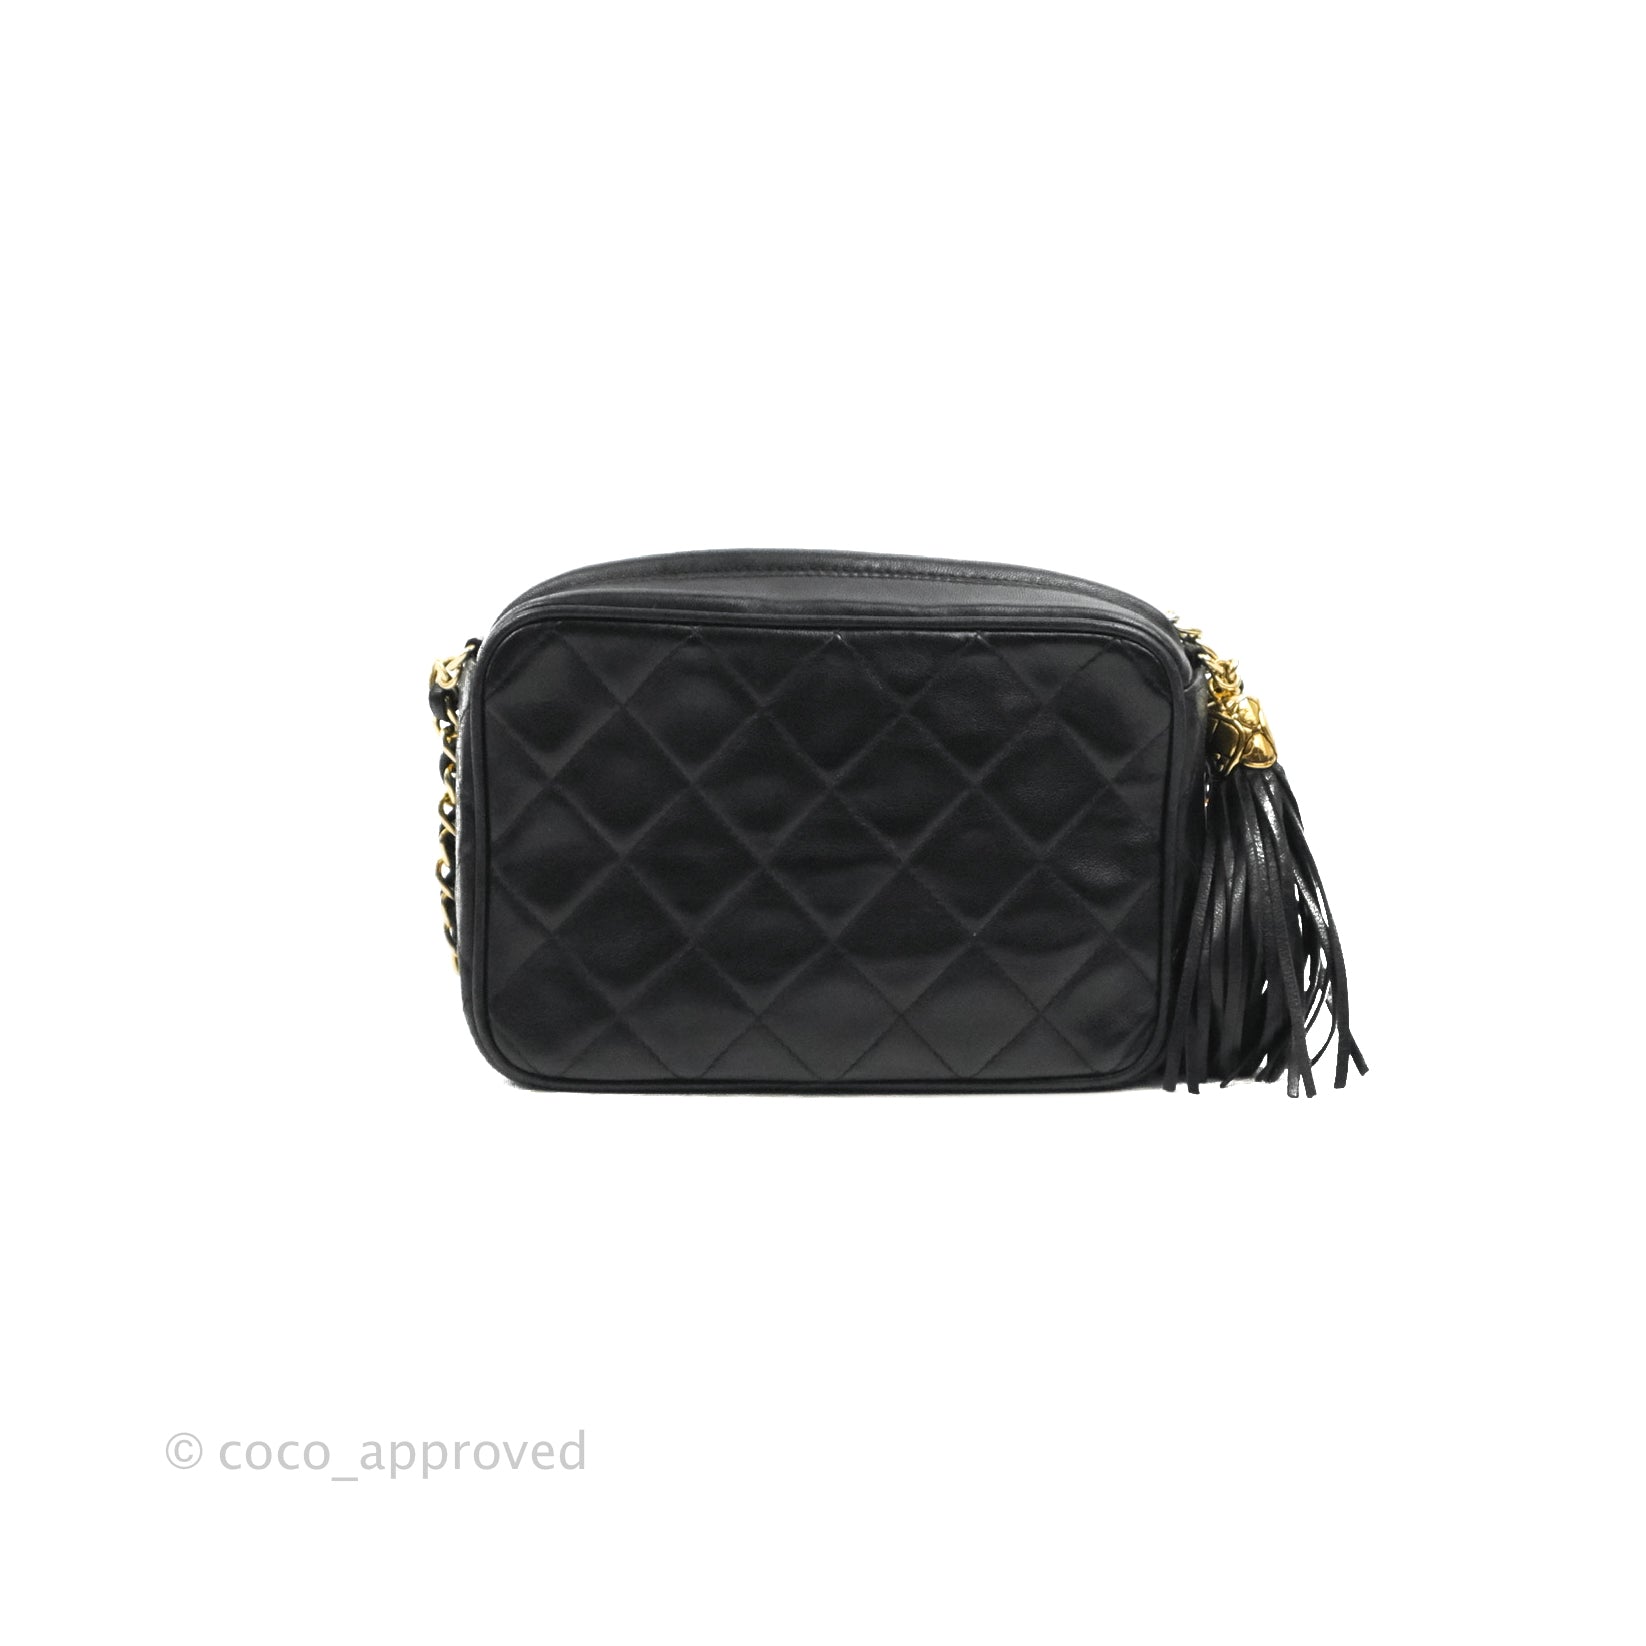 Chanel Black Quilted Lambskin Box Bag Tortoiseshell Bakelite Hardware, 1996-1997 (Very Good)